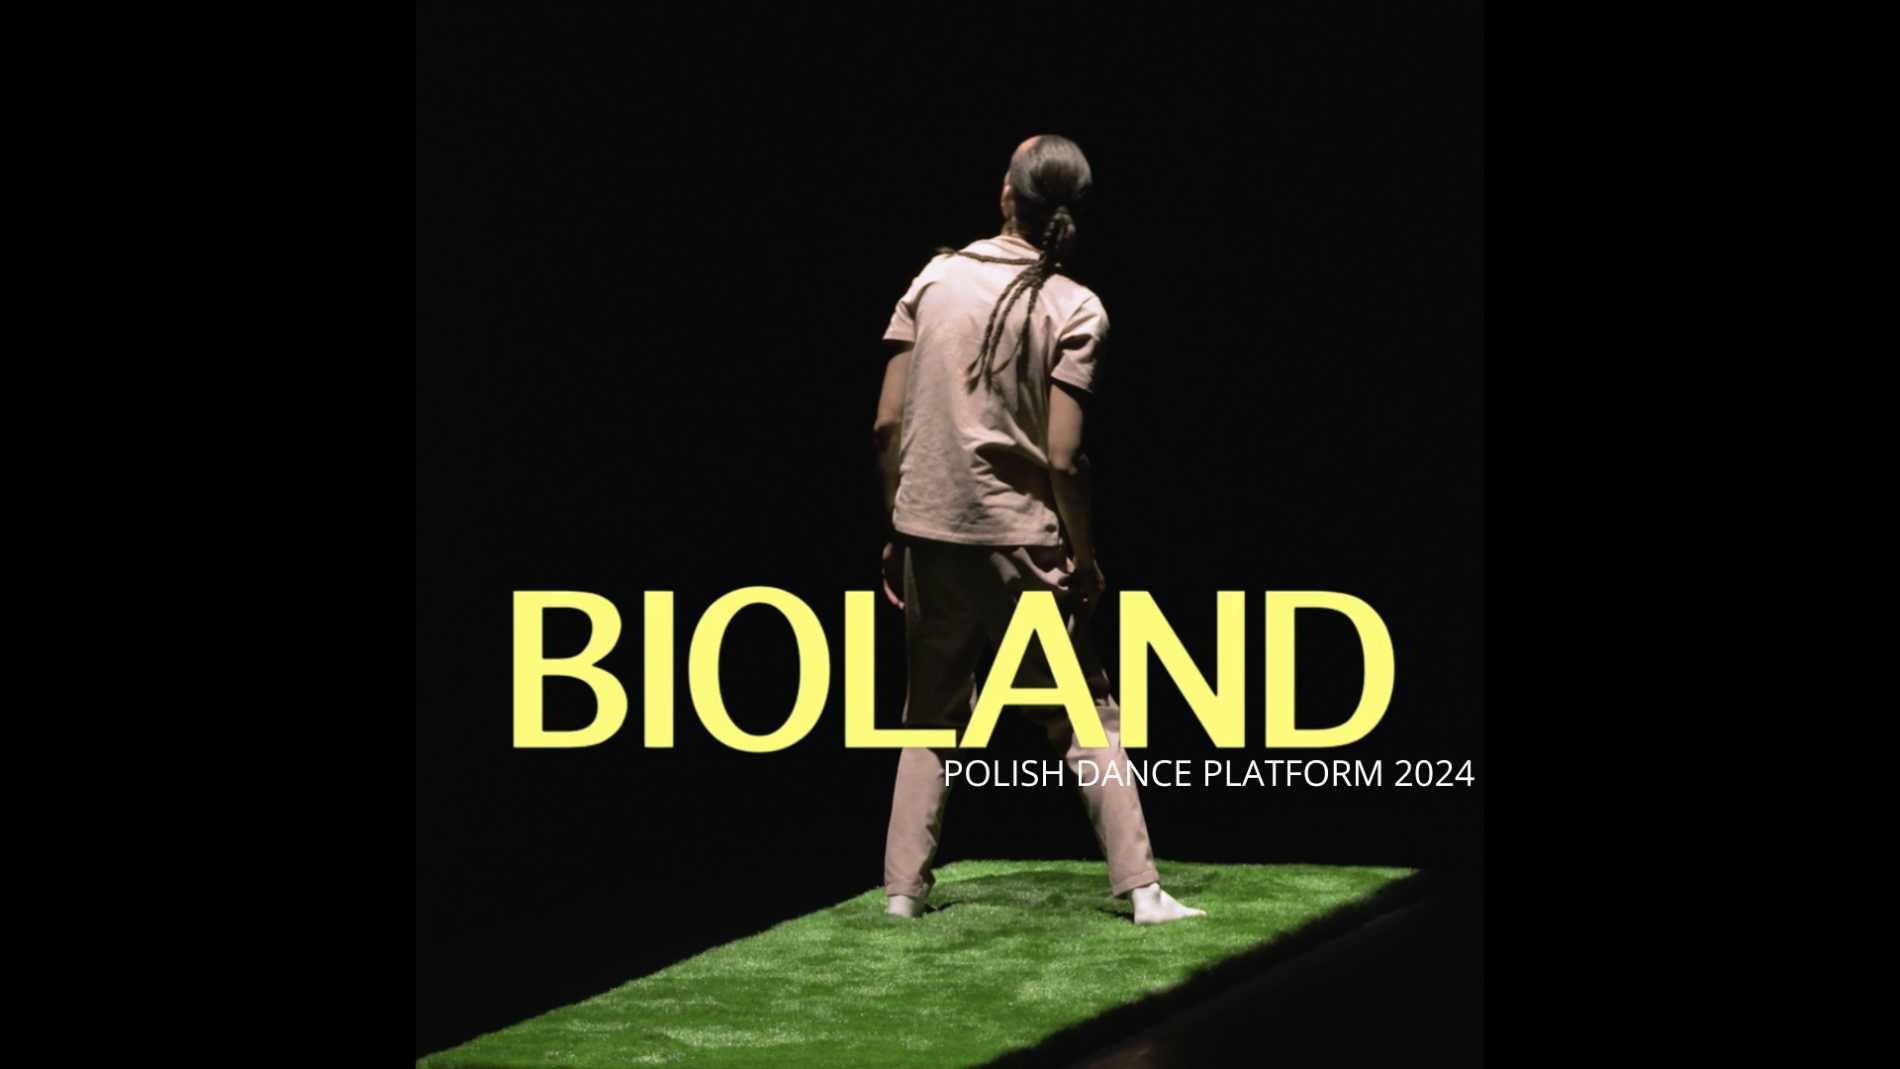 BIOLAND – Polish premiere in September 2024